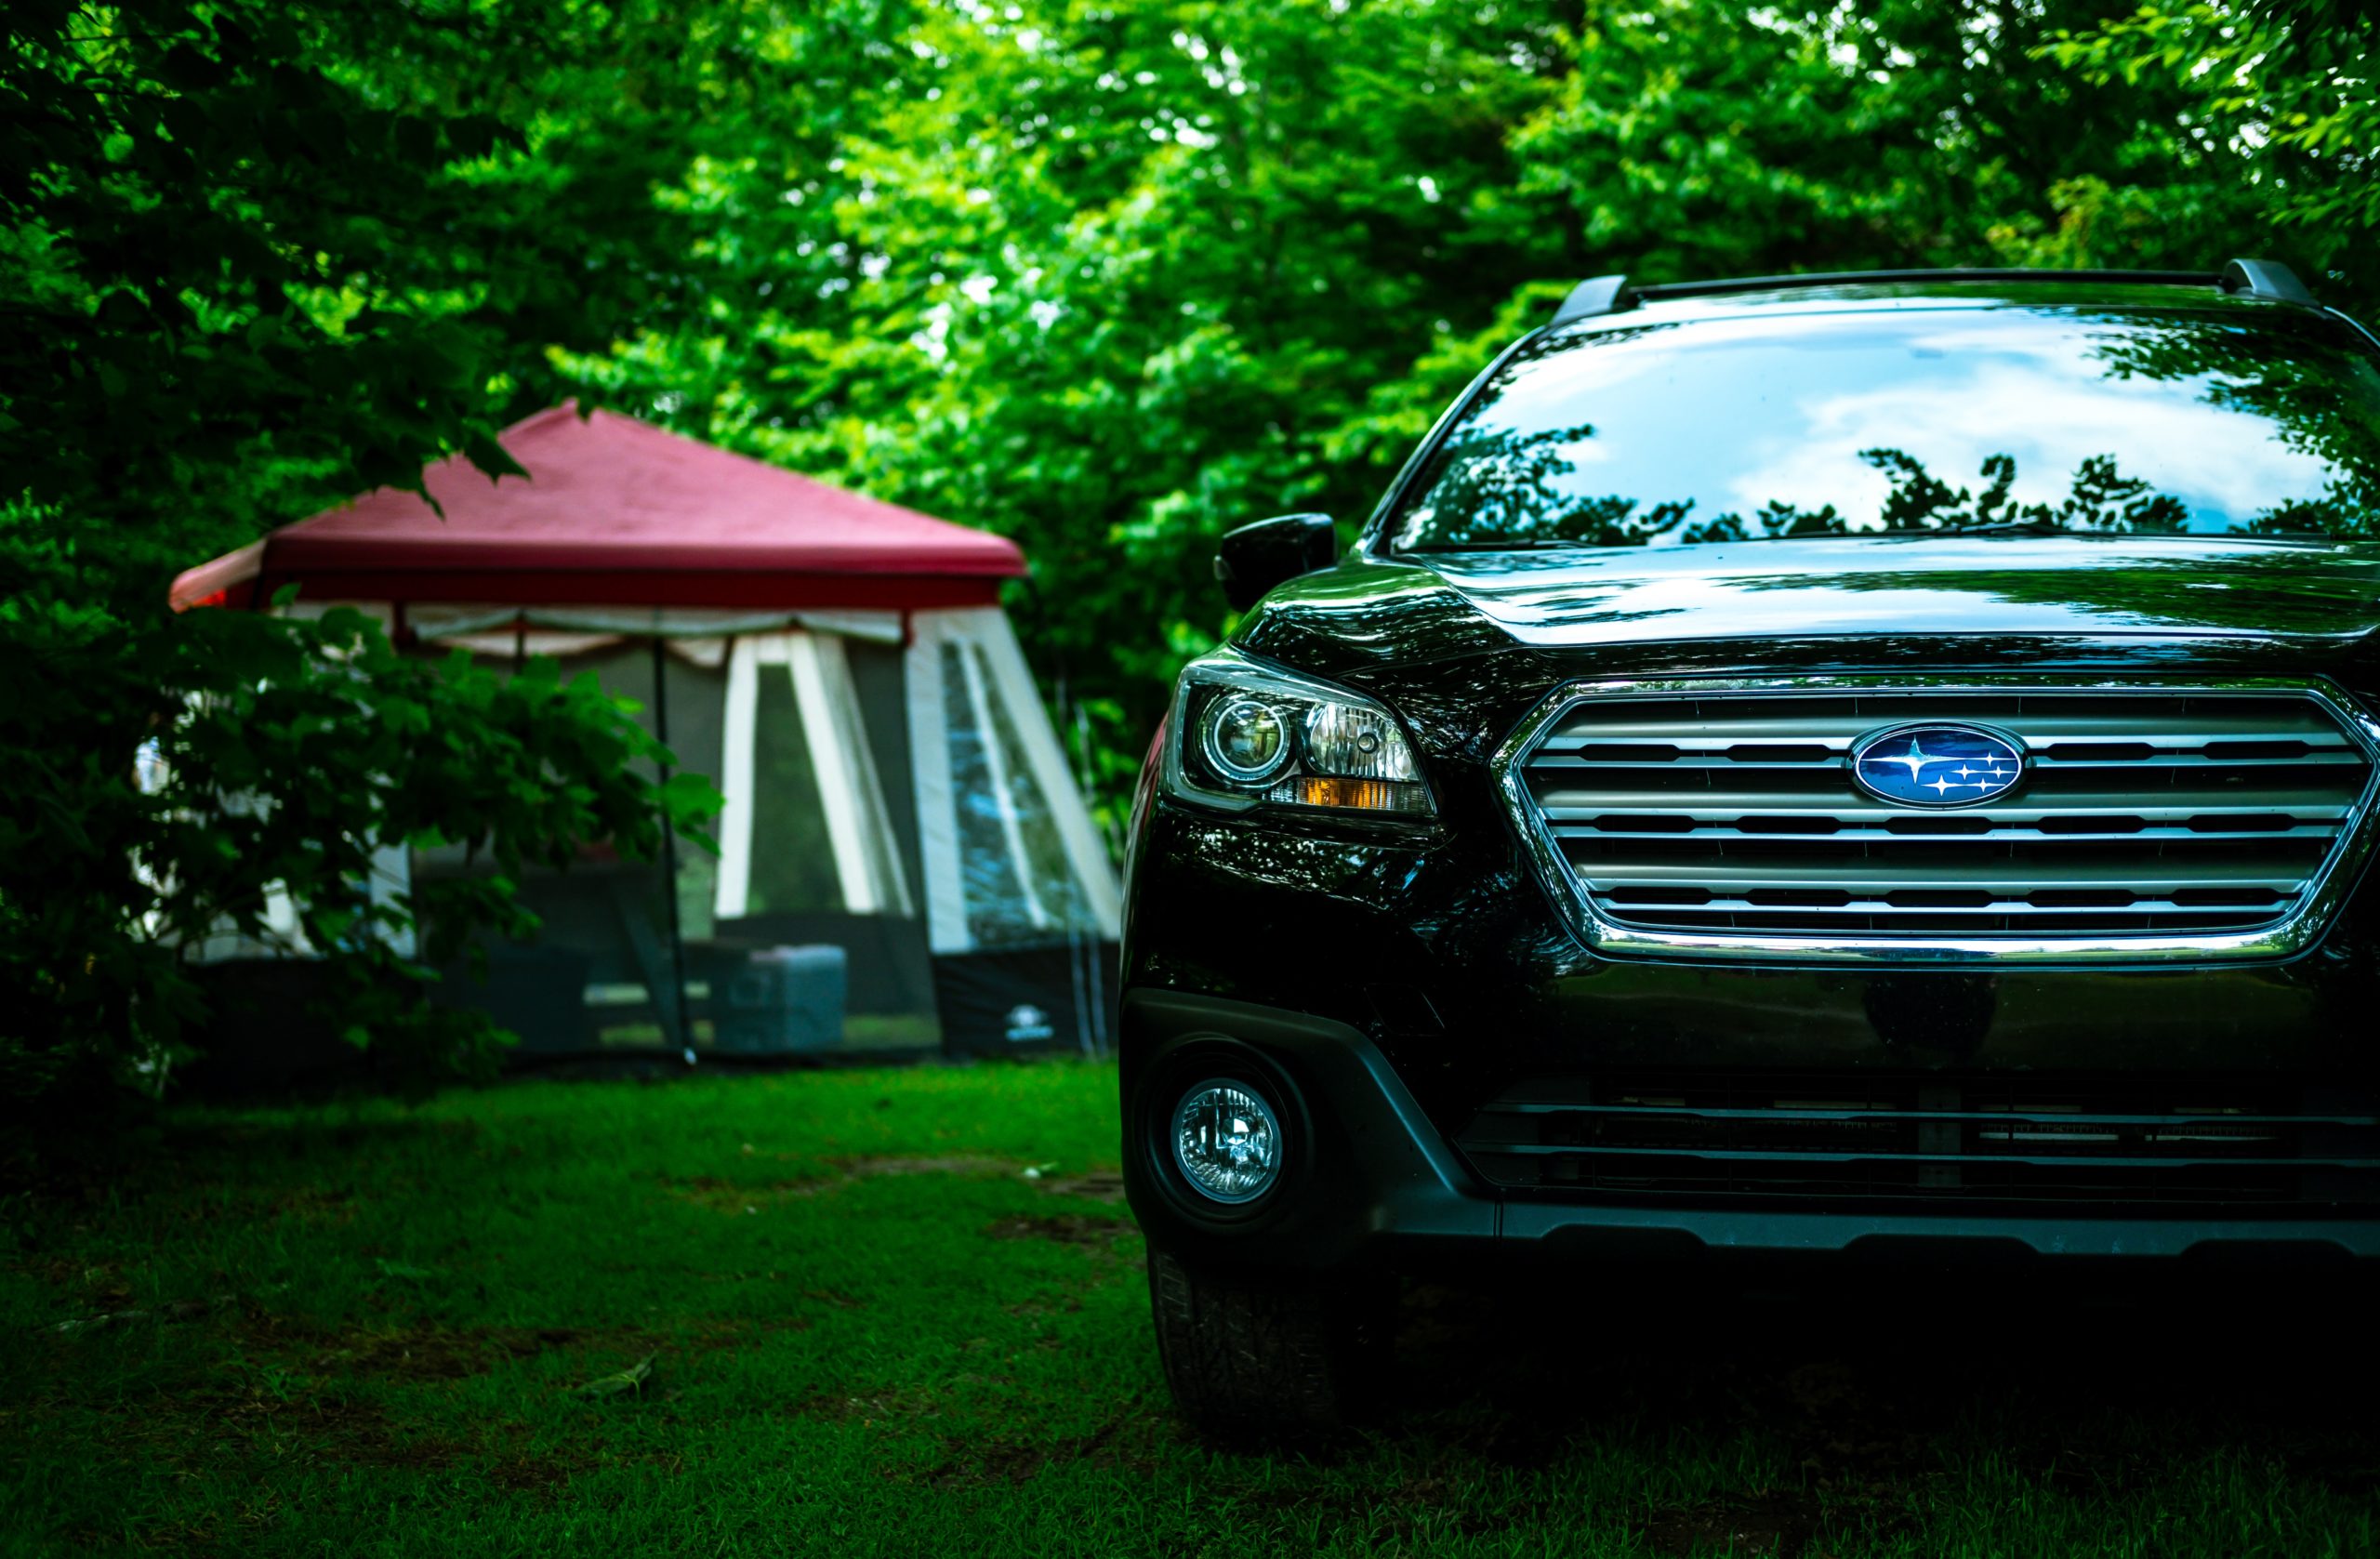 Subaru outback on a car camping trip